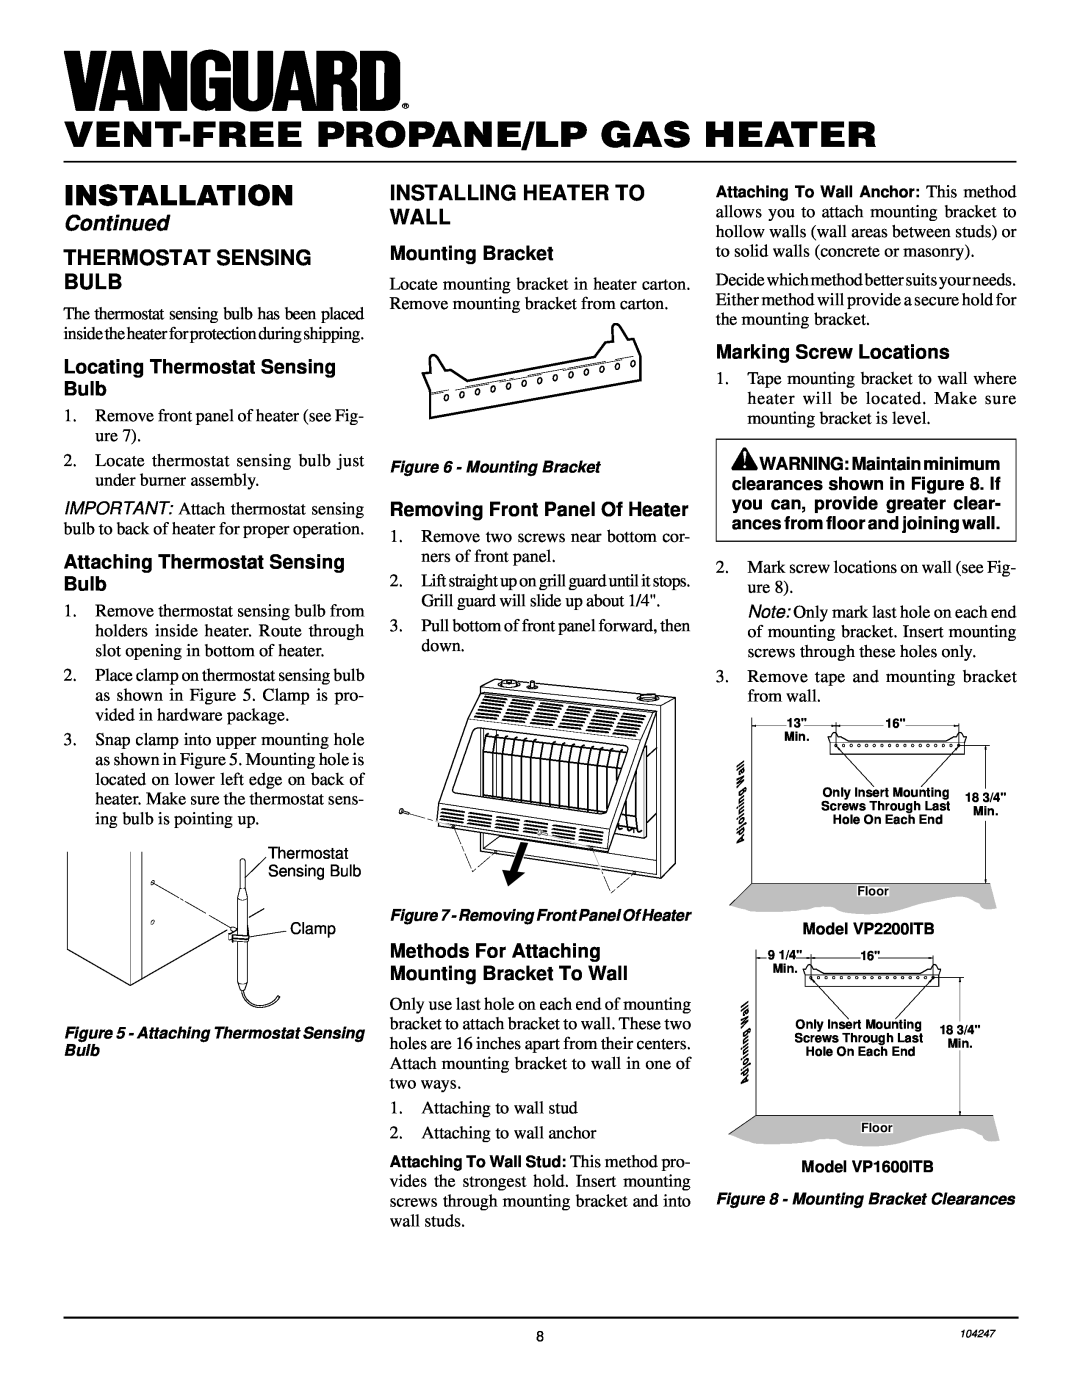 Desa VP2200ITB Vent-Freepropane/Lp Gas Heater, Installation, Continued, Locating Thermostat Sensing Bulb, Mounting Bracket 